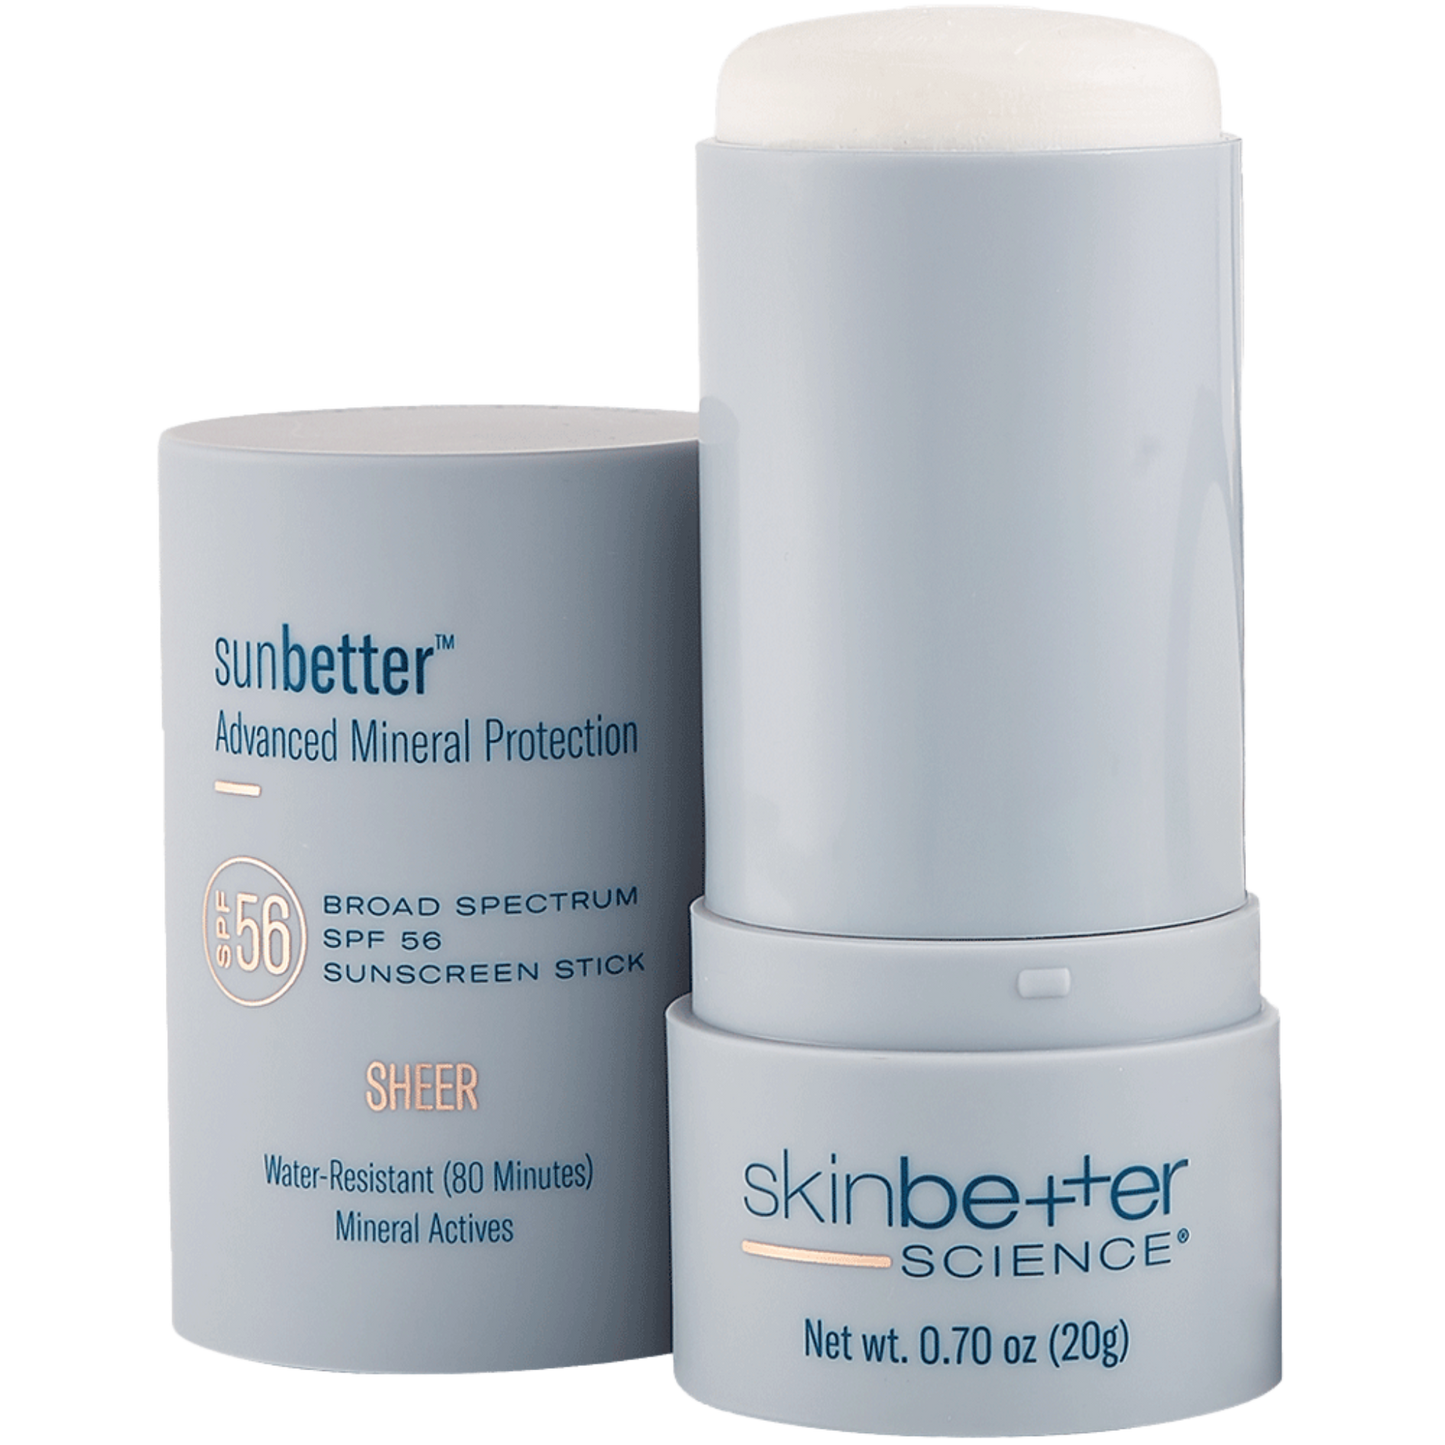 sunbetter SHEER SPF 56 Sunscreen Stick | skinbetter science®